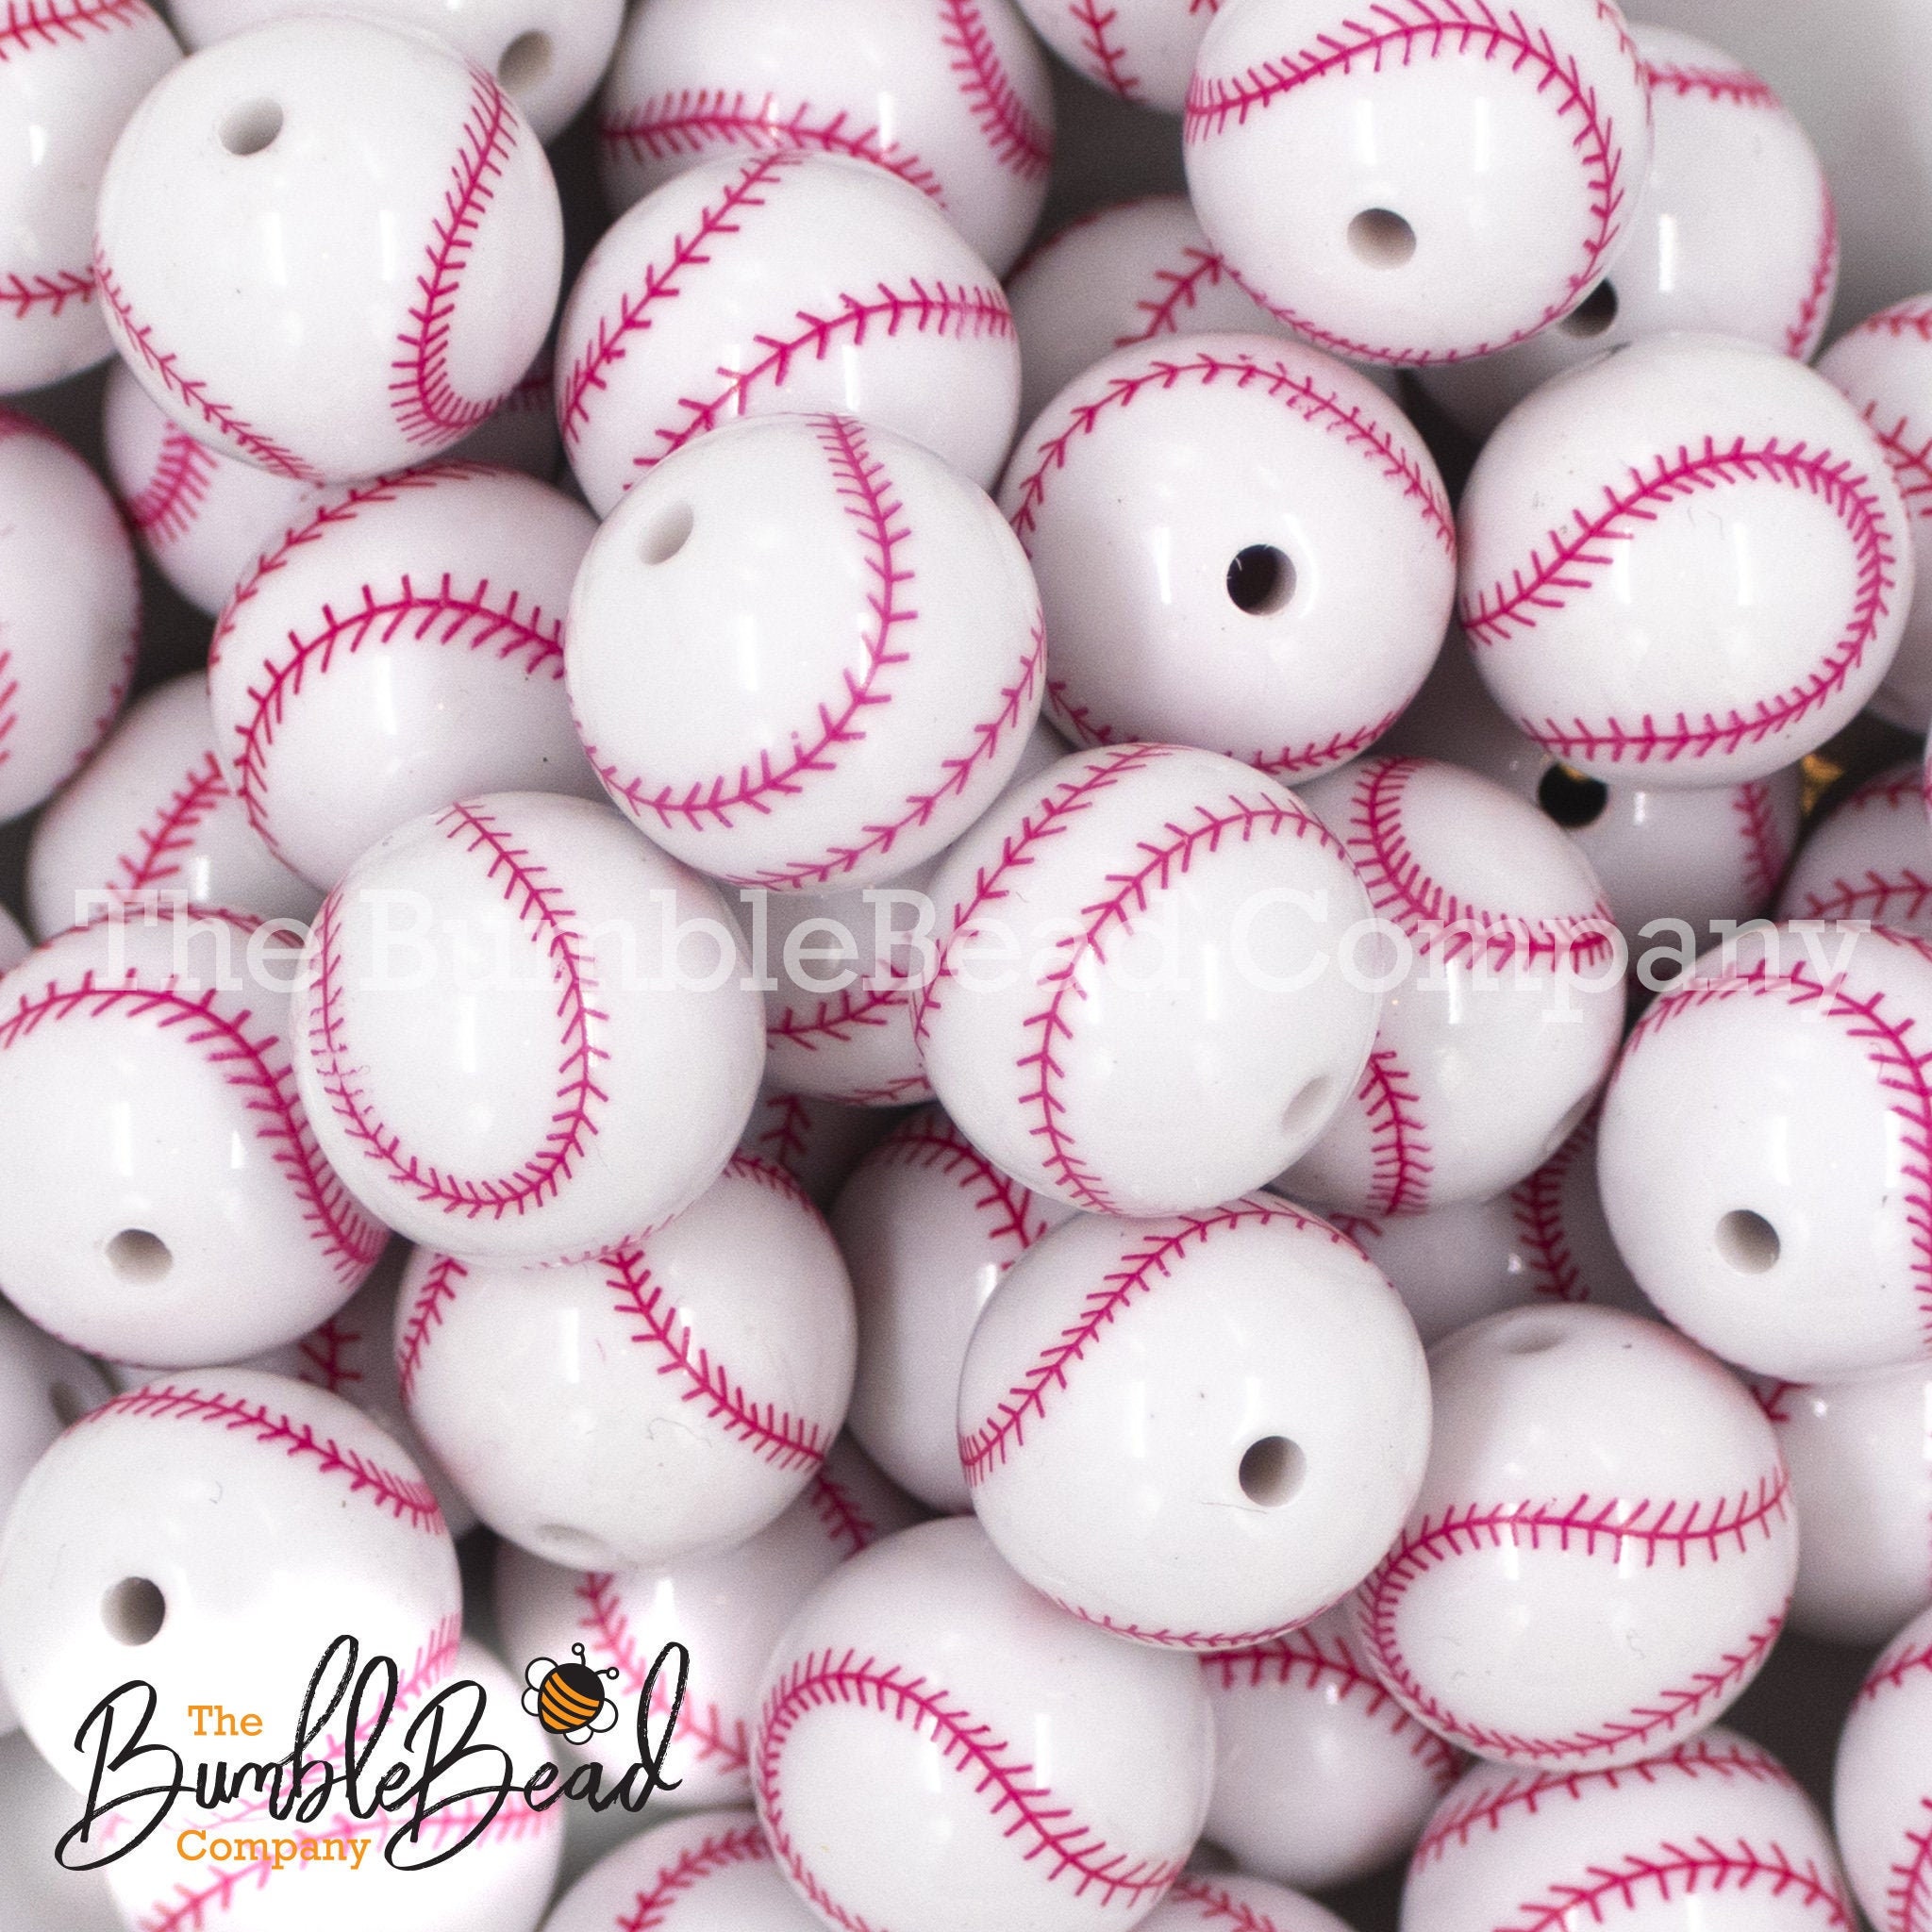 Wholesale Baseball Plating Acrylic Beads 